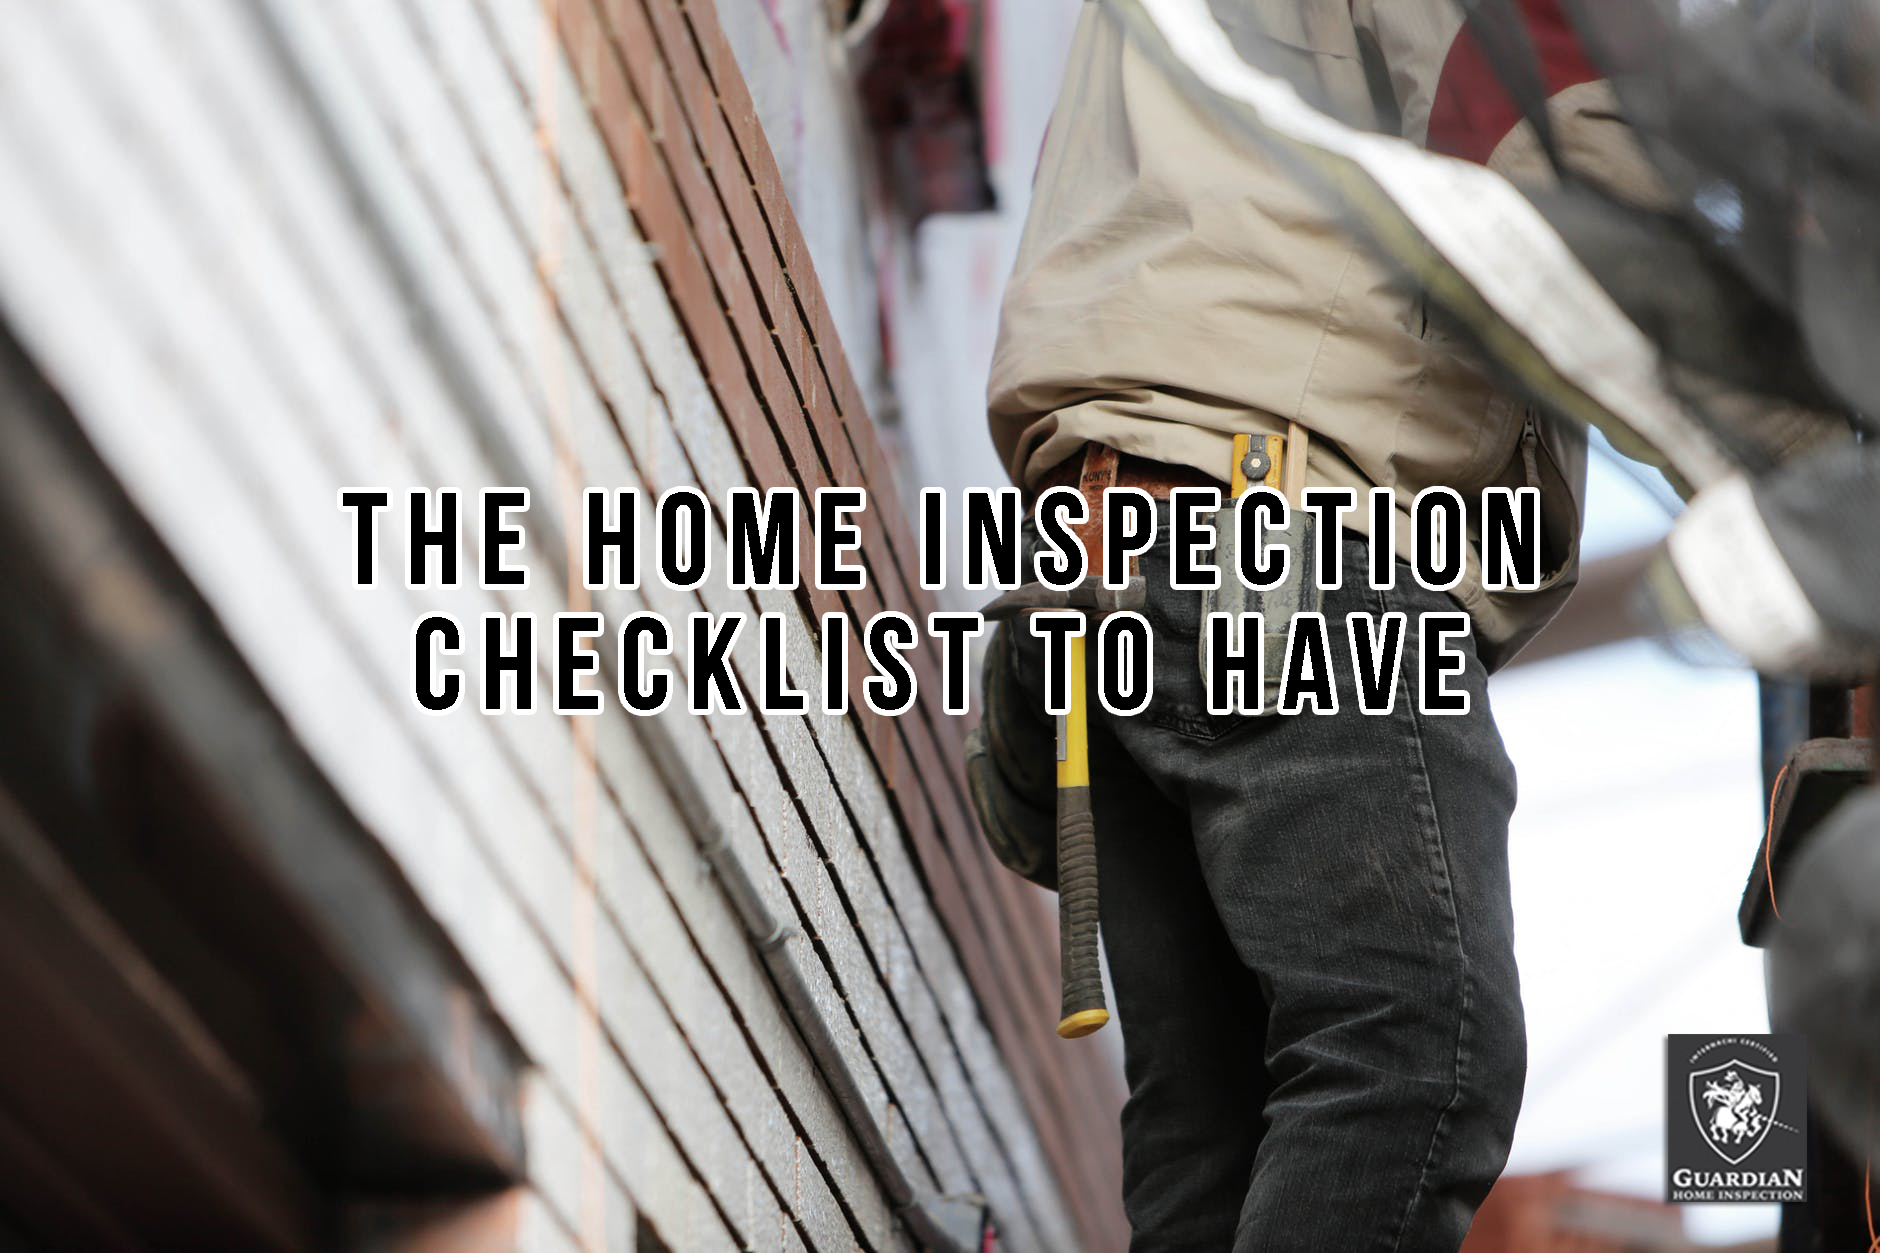 inspection checklist